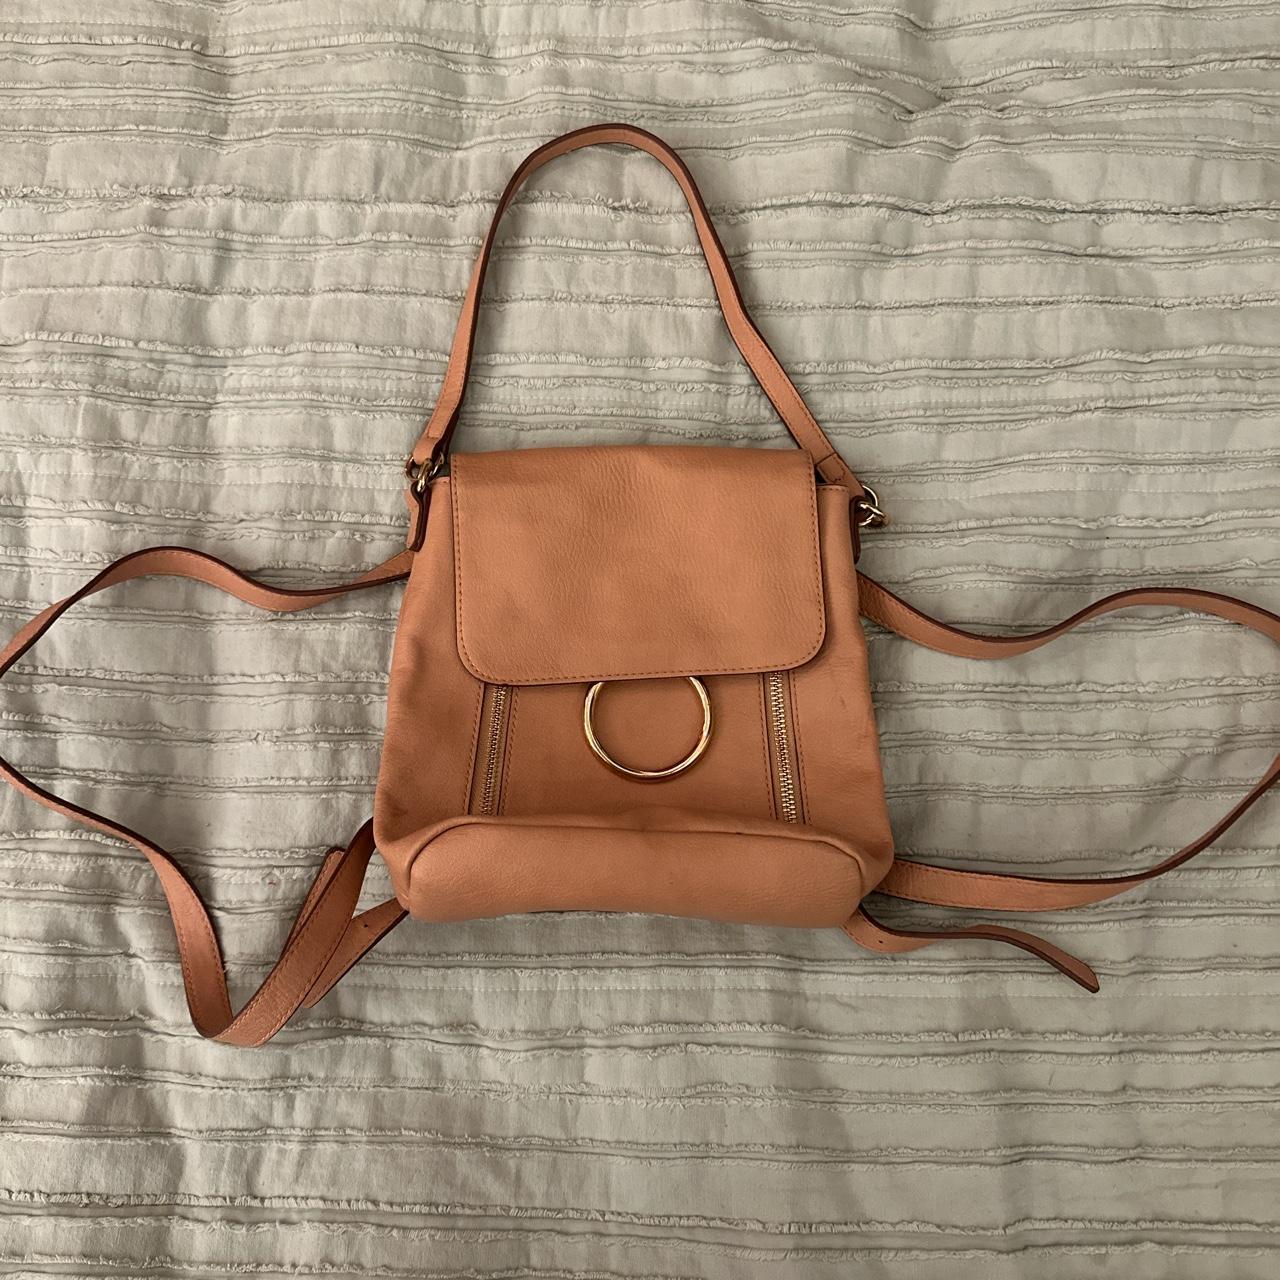 lauren conrad leather purse